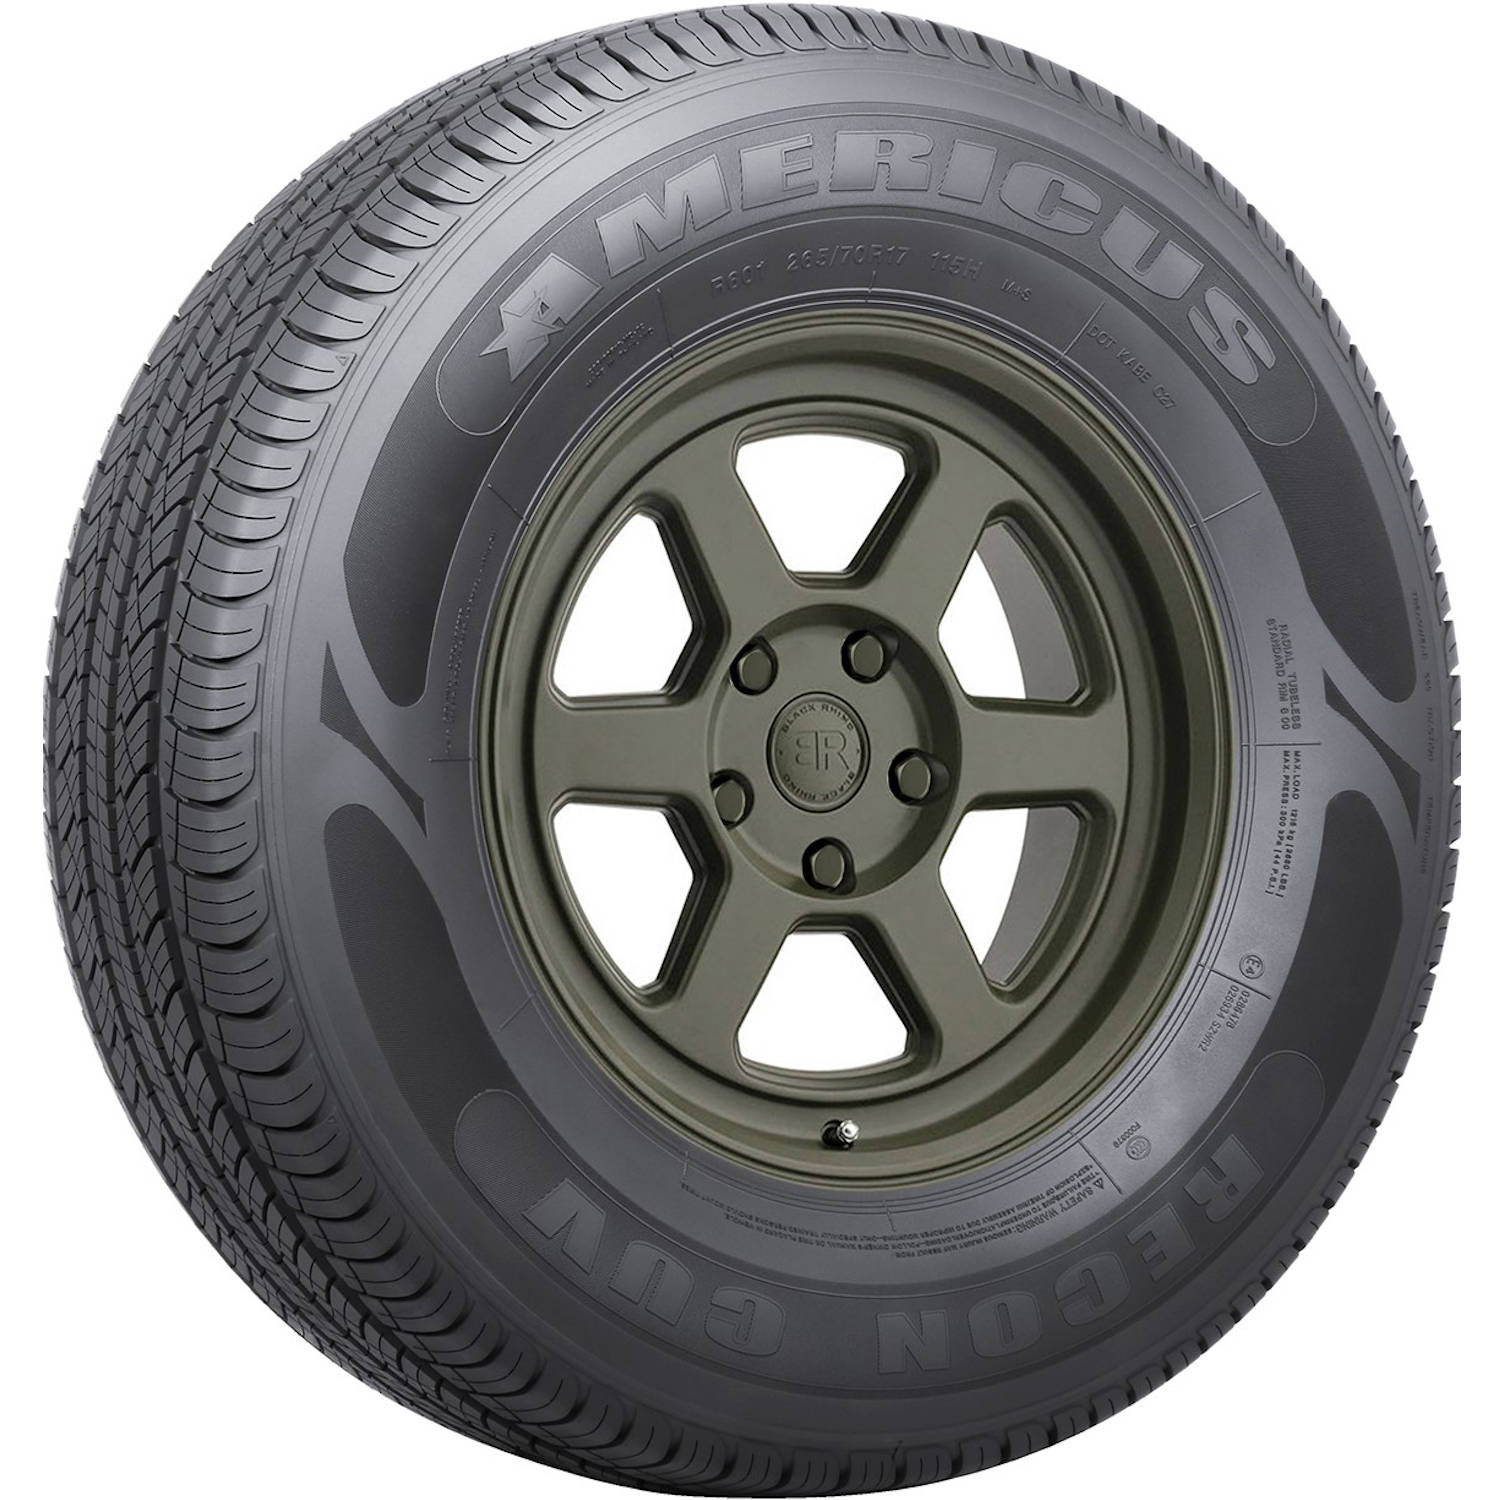 AMERICUS RECON CUV 255/65R18 (31.1X10R 18) Tires